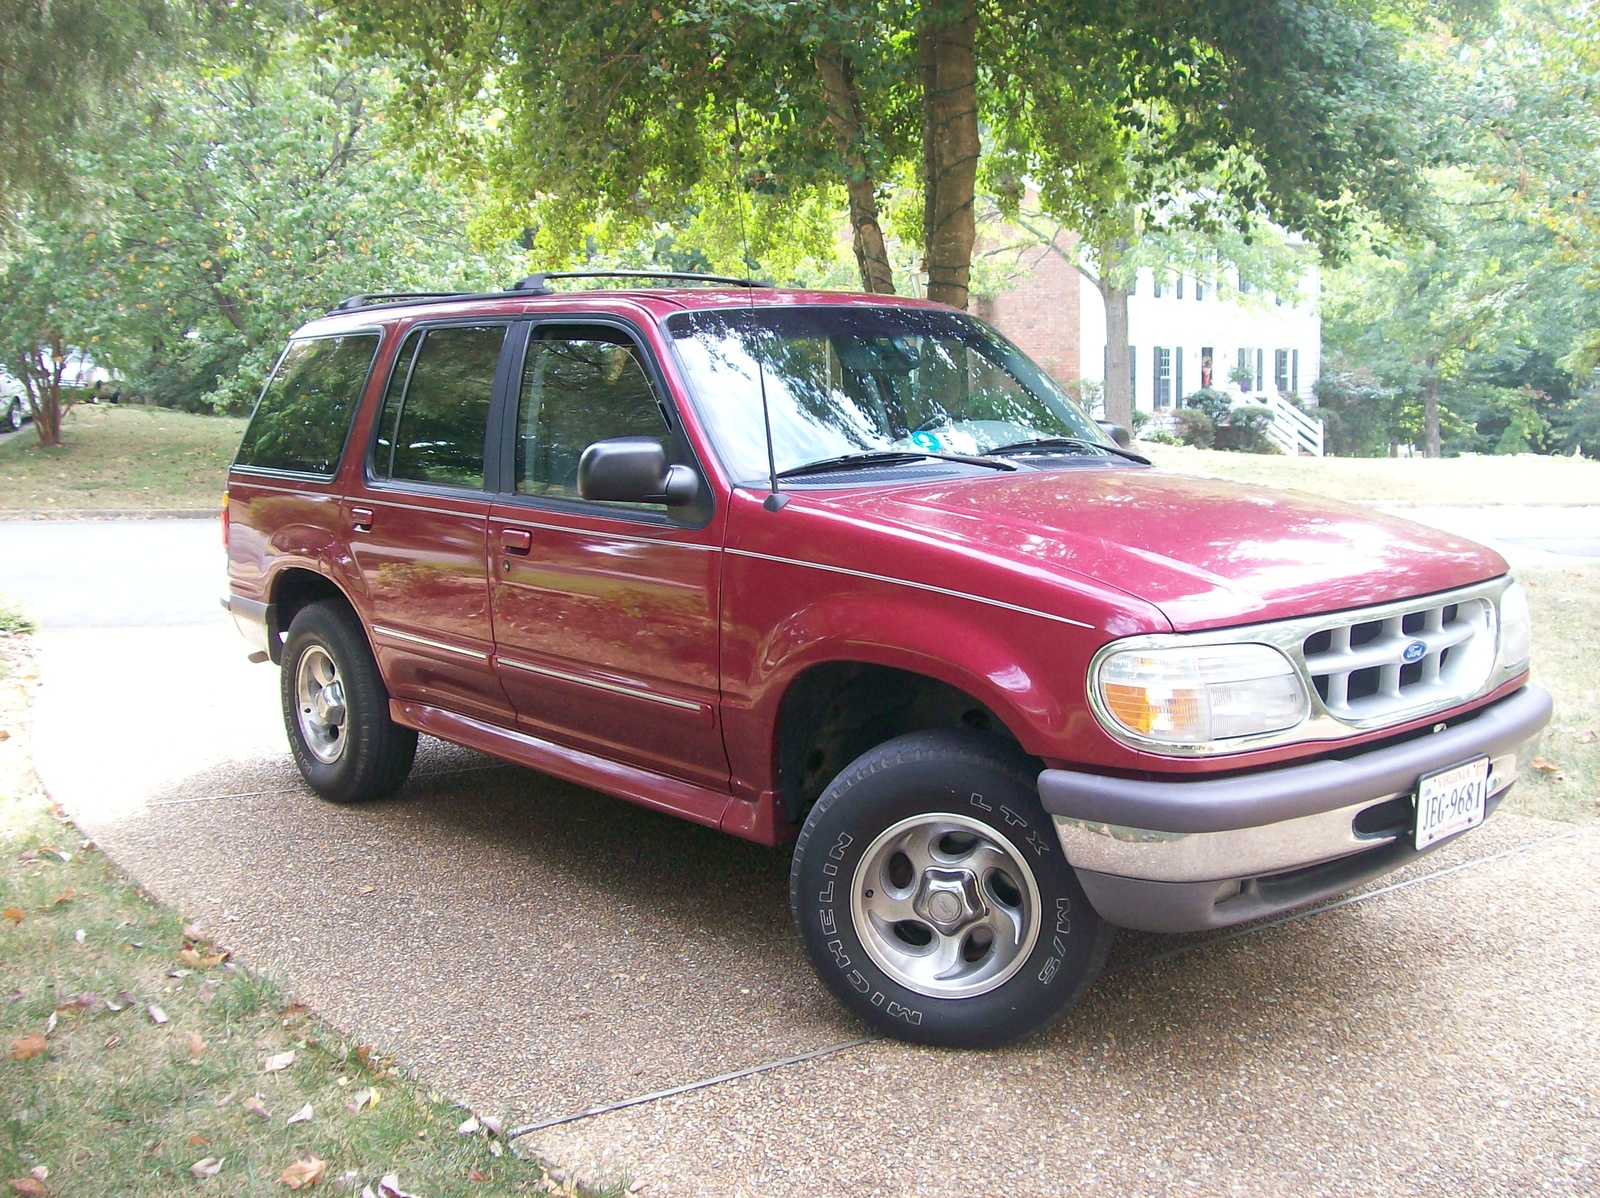 Car value 1996 ford explorer #7